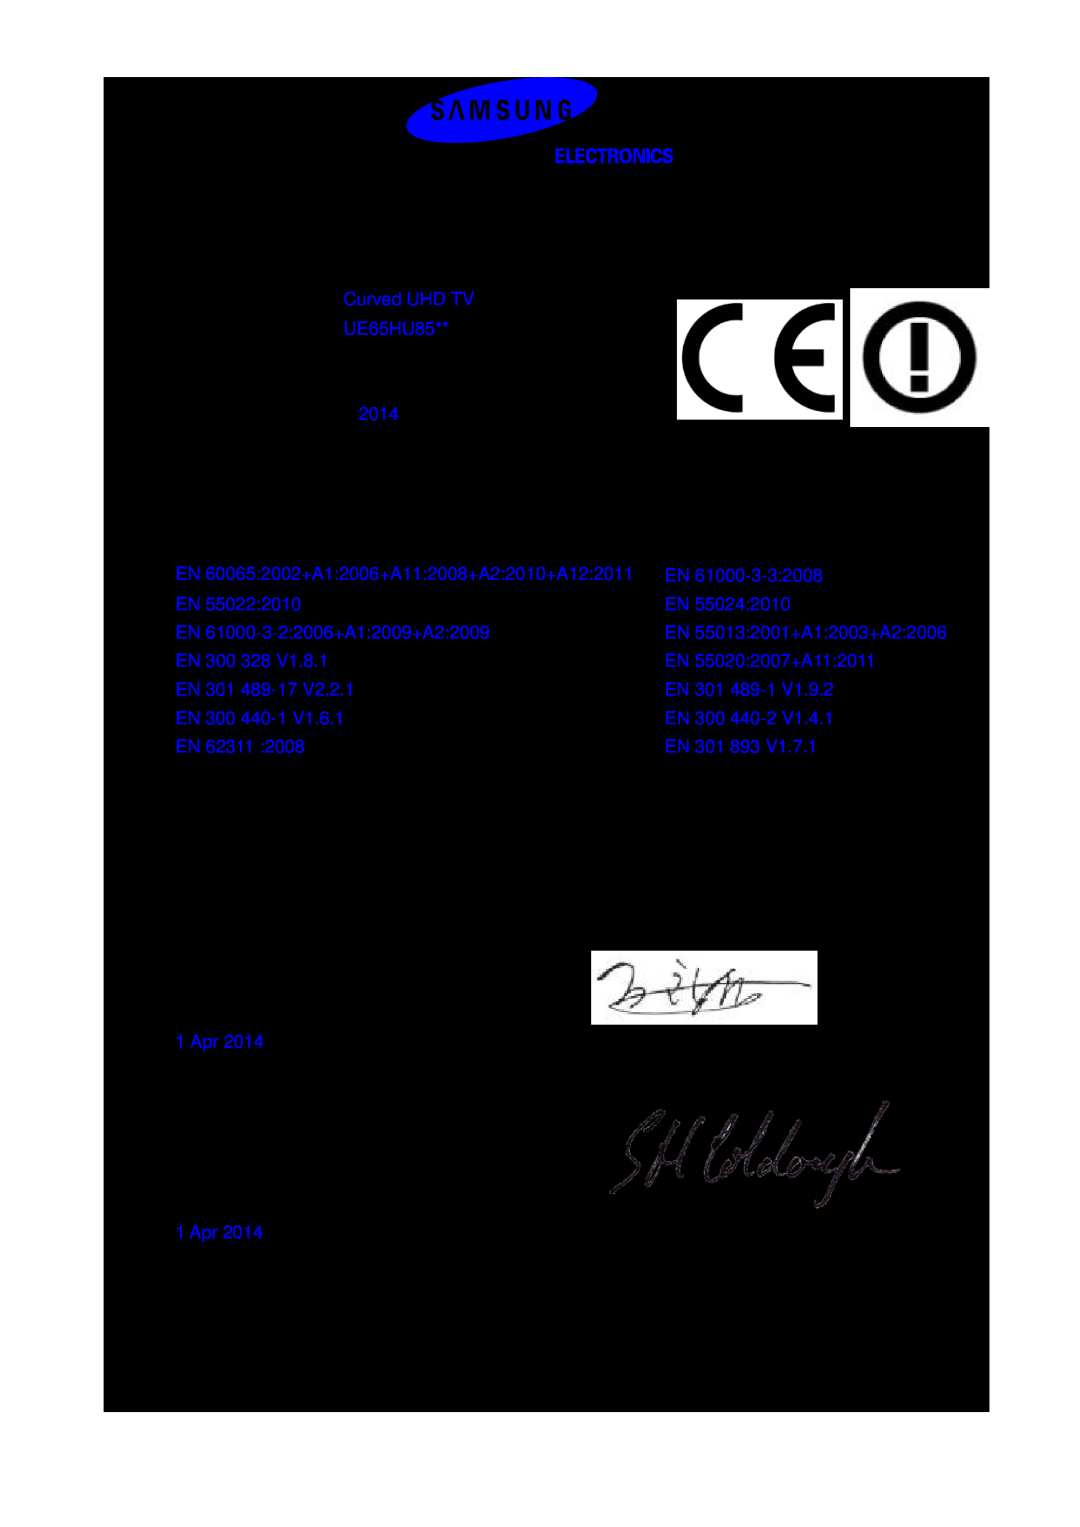 Samsung UE55HU8500LXXC, UE65HU8500LXXH, UE55HU8505QXXE, UE55HU8500LXXH manual Declaration of Conformity, Curved UHD TV 